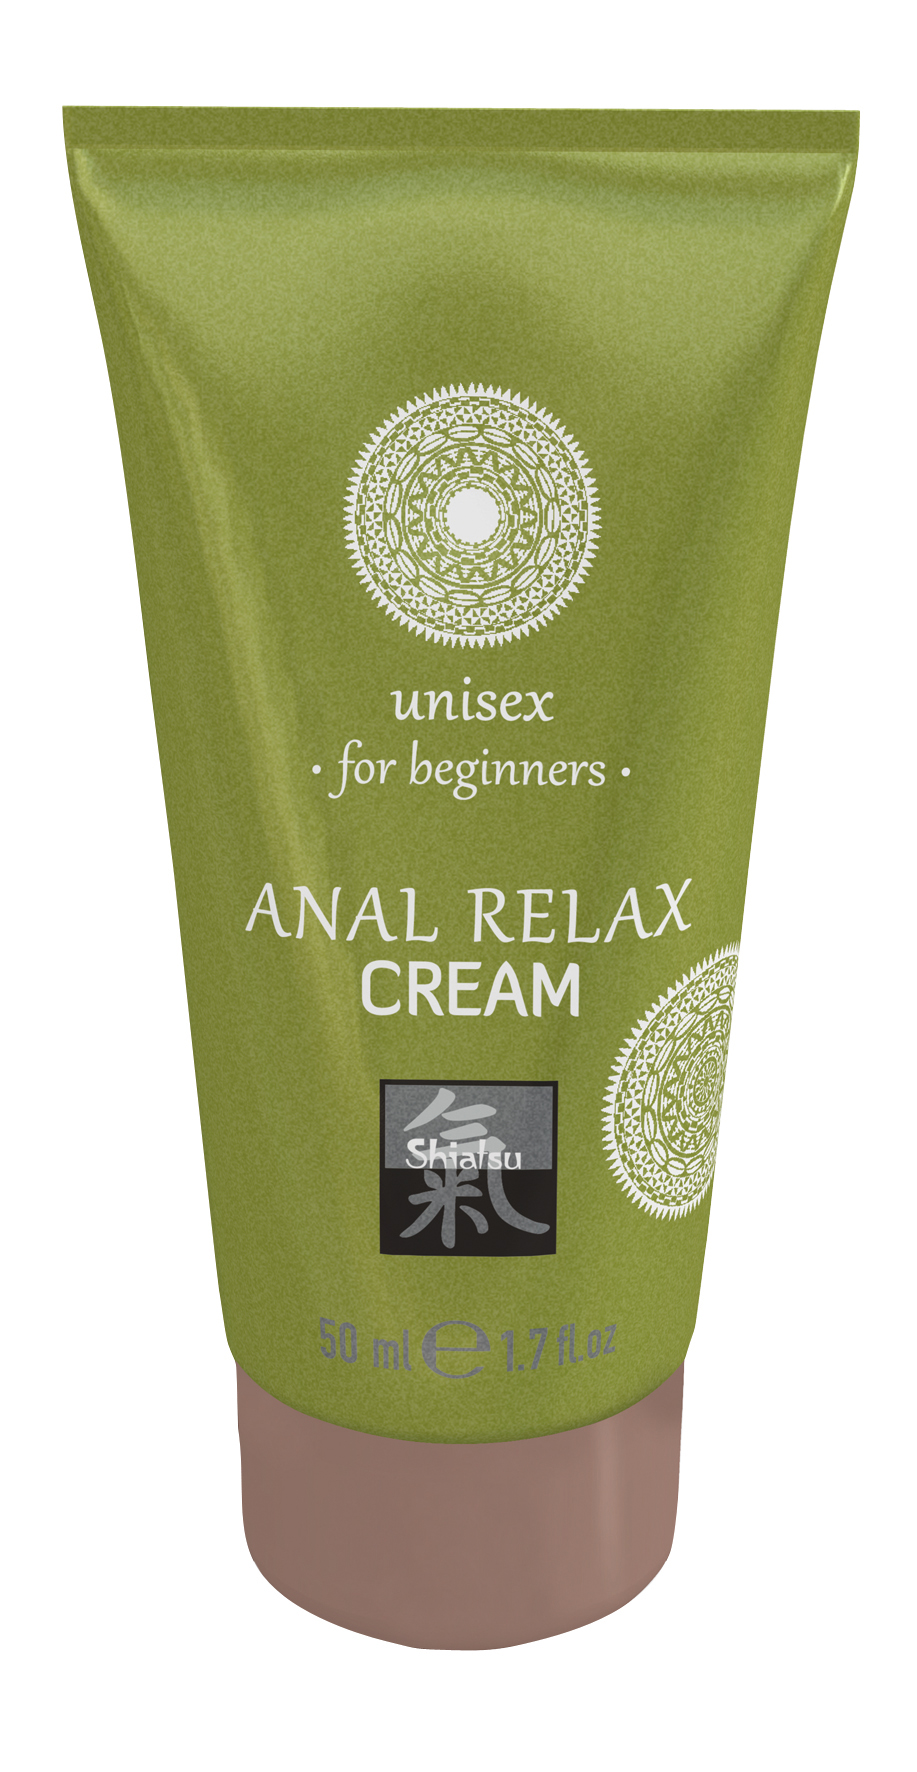 SHIATSU Anal relax cream beginners 50ml